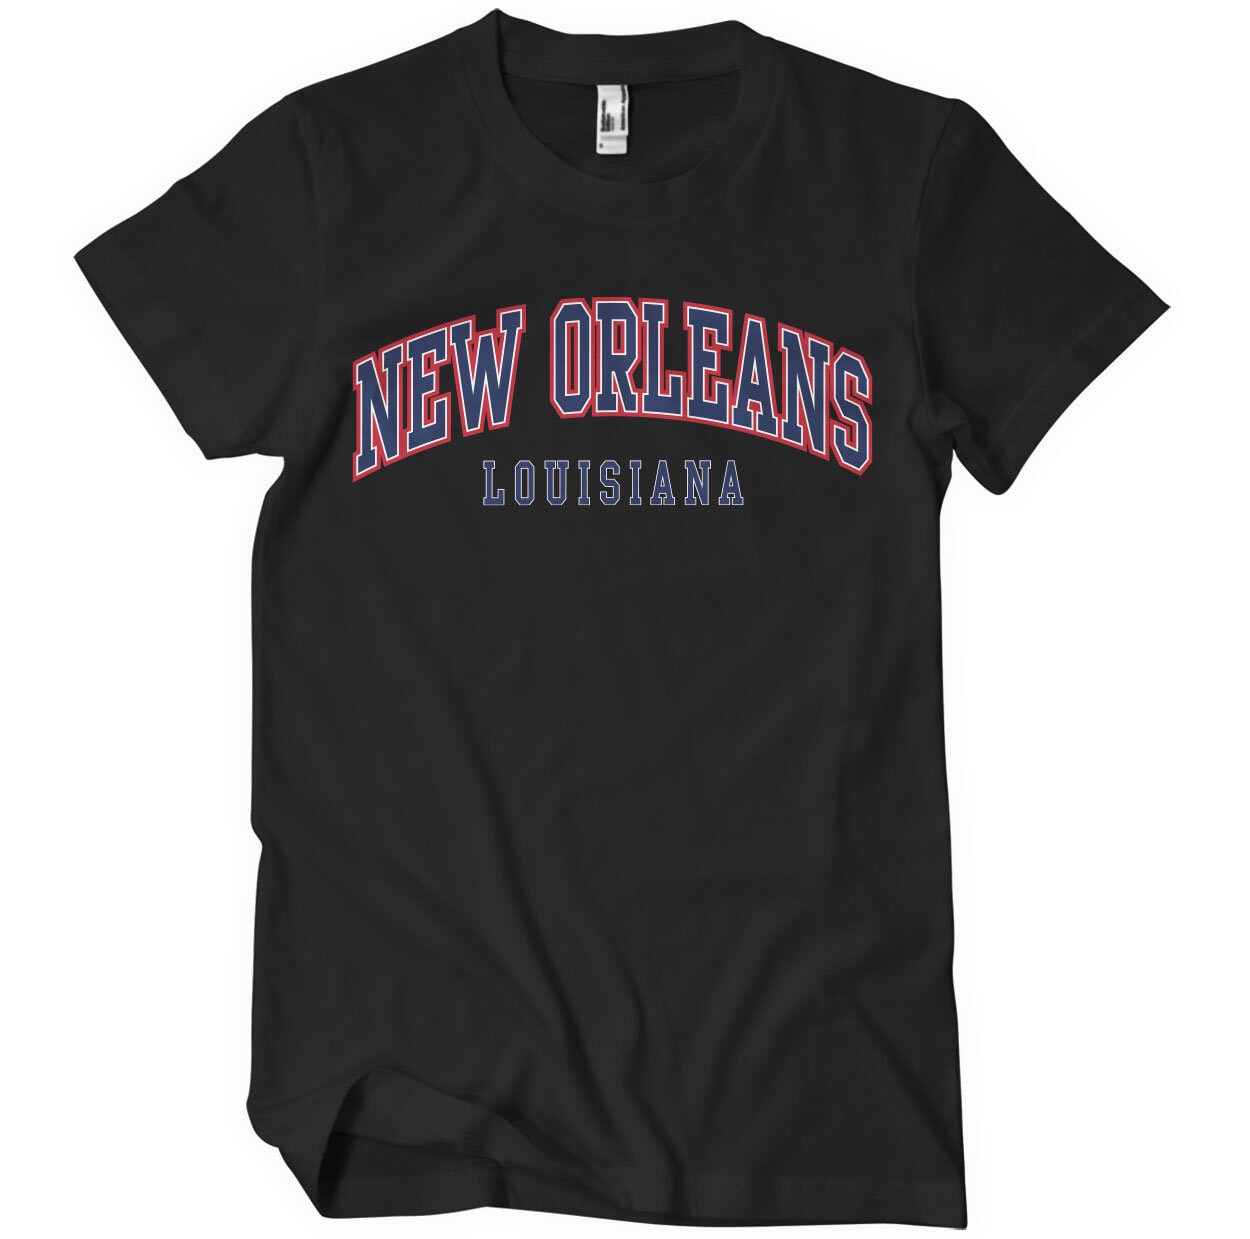 New Orleans - Louisiana T-Shirt